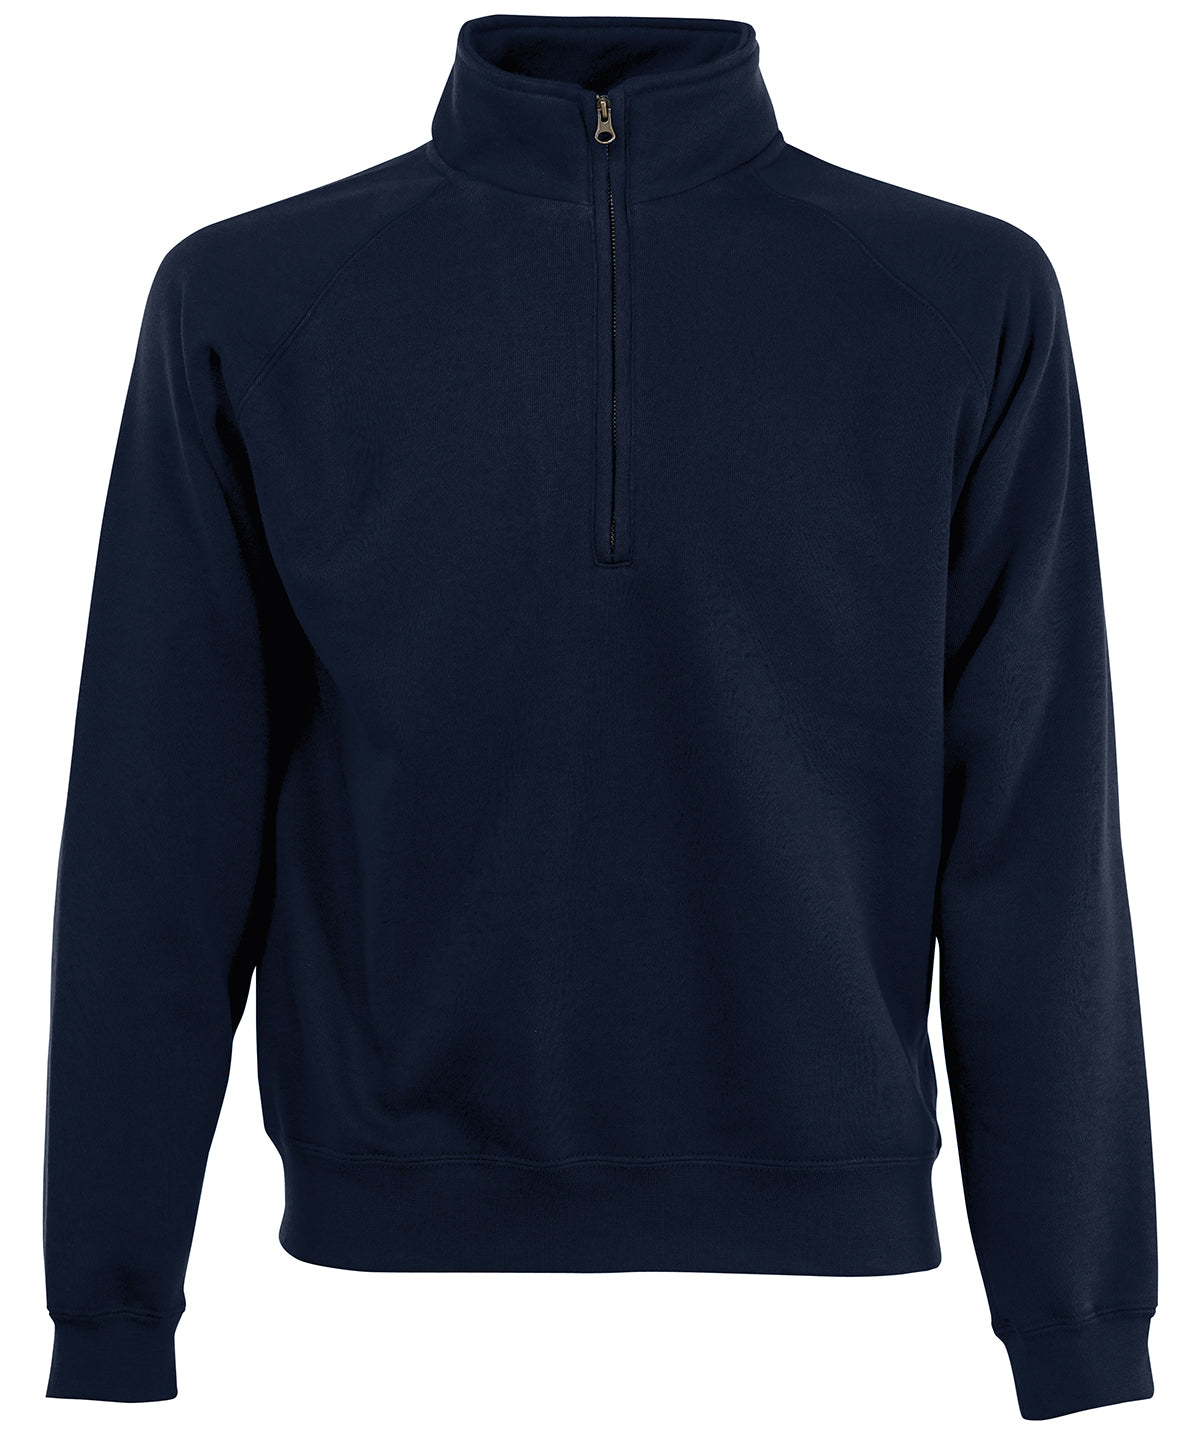 Personalised Sweatshirts - Black Fruit of the Loom Classic 80/20 zip neck sweatshirt